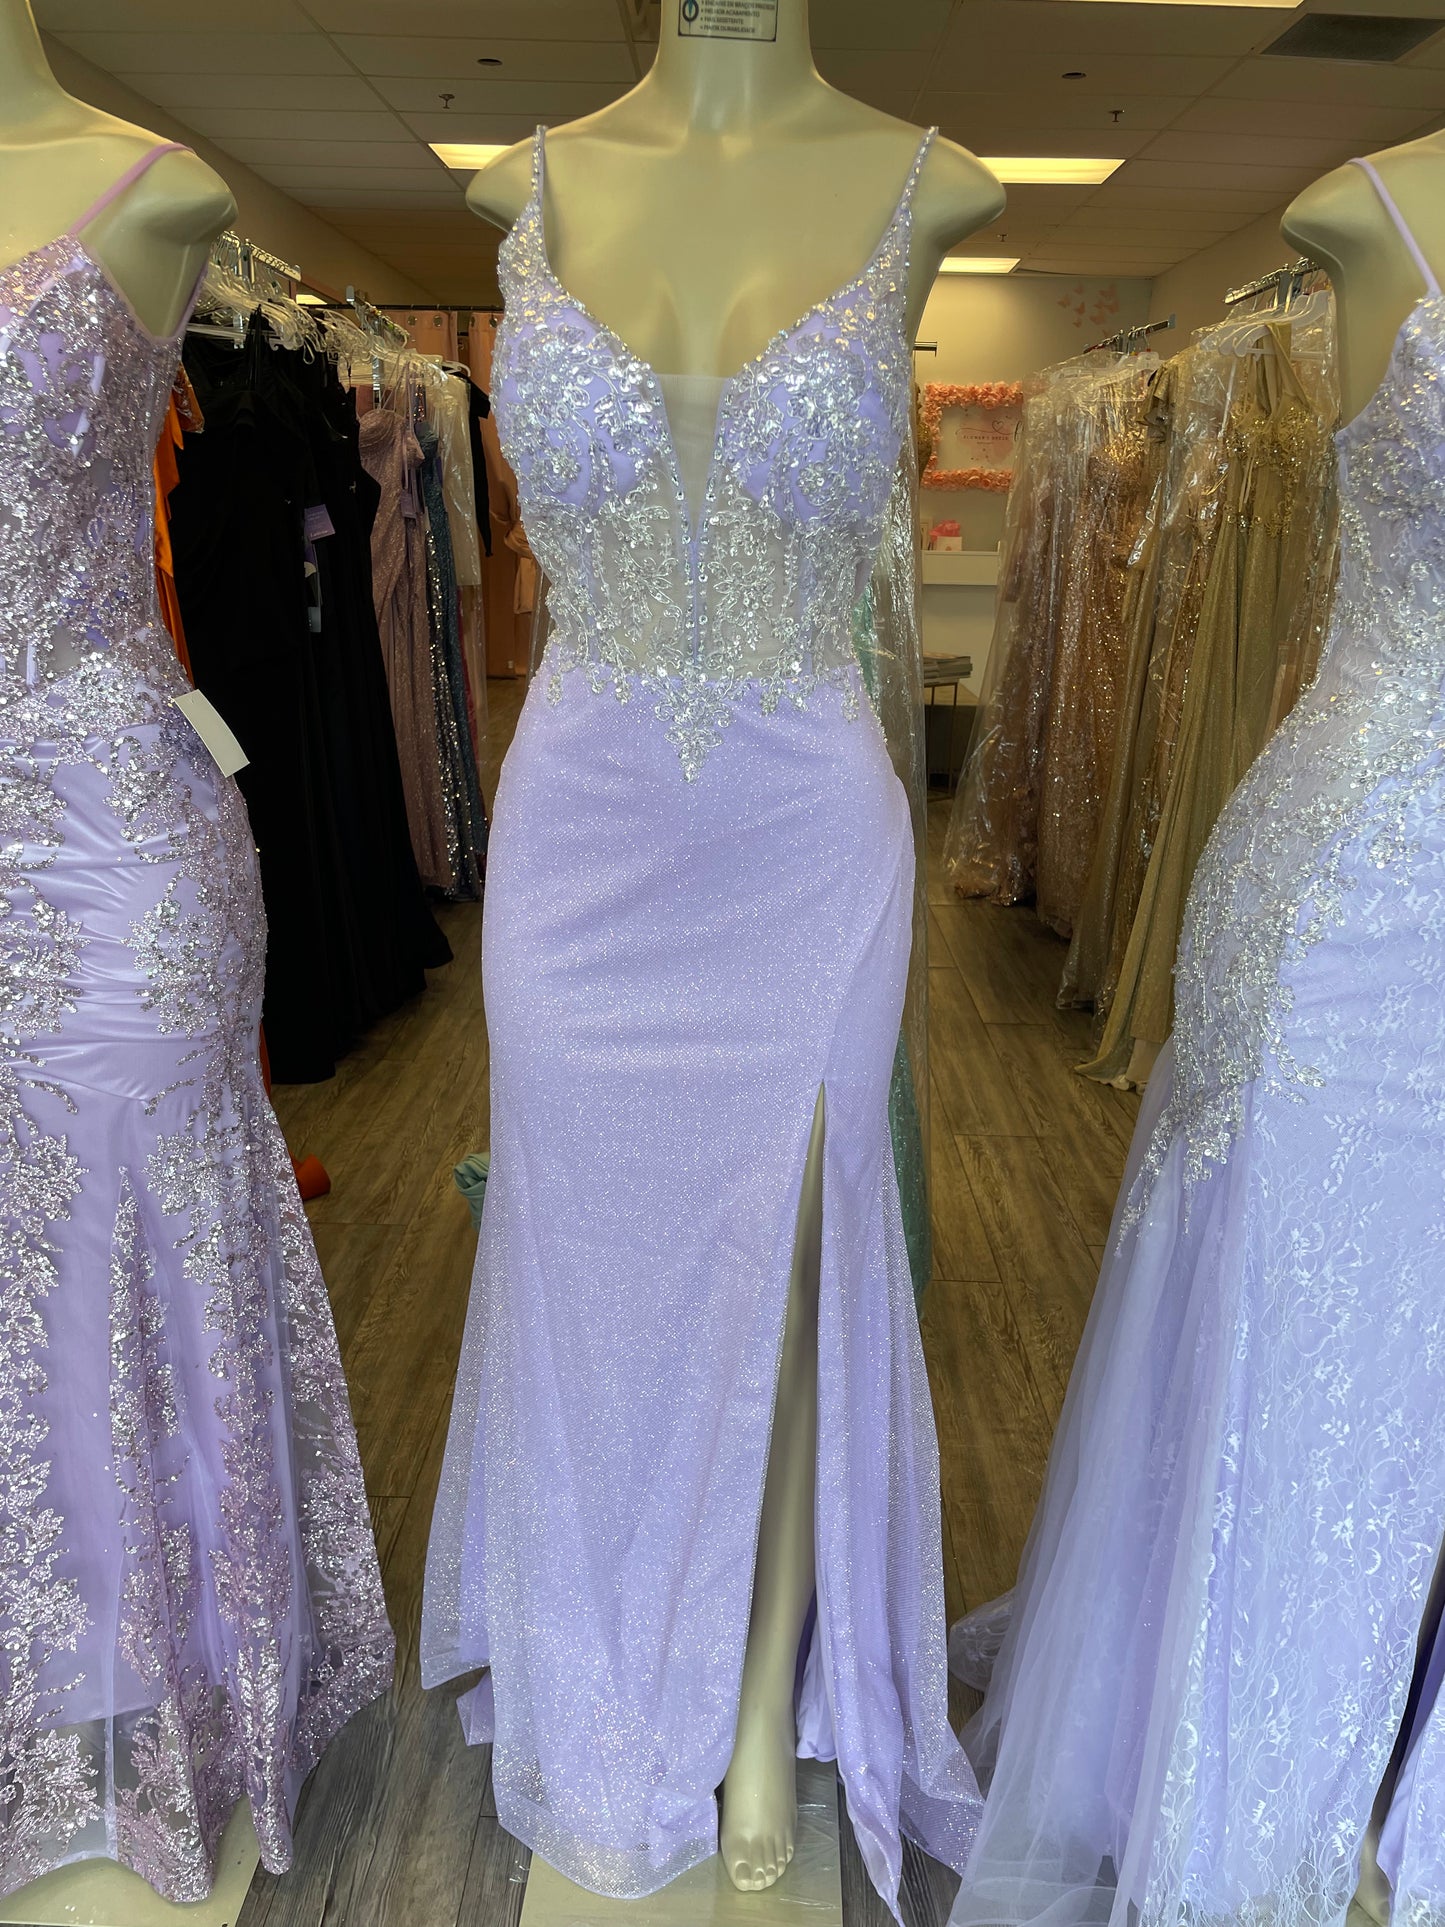 Amelia Sequin Lilac Glitter Dress